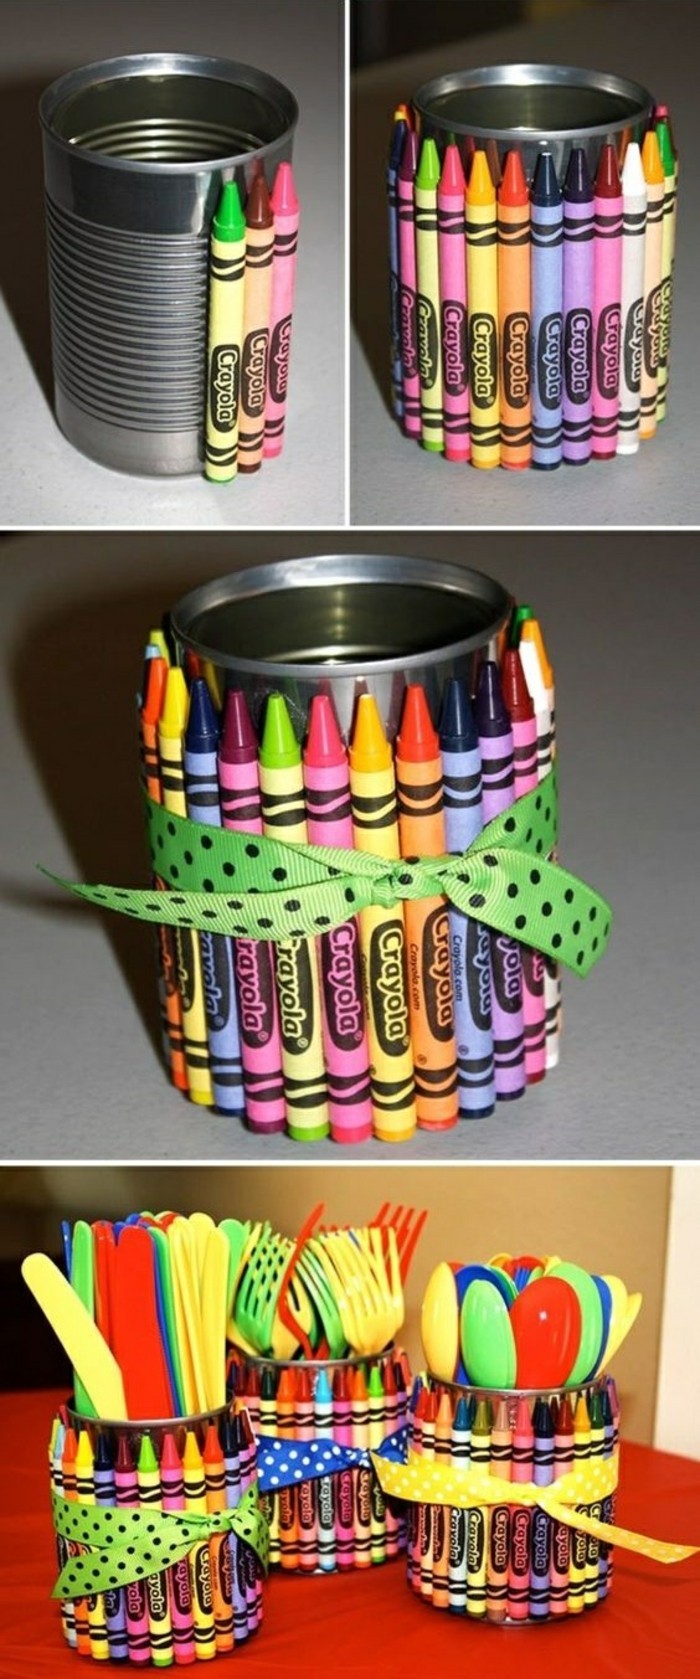 7-रचनात्मक-टिंकर-डिब्बे-platikloeffeln-कांटा लूप-diy-रंगीन-हल्के पेंसिल